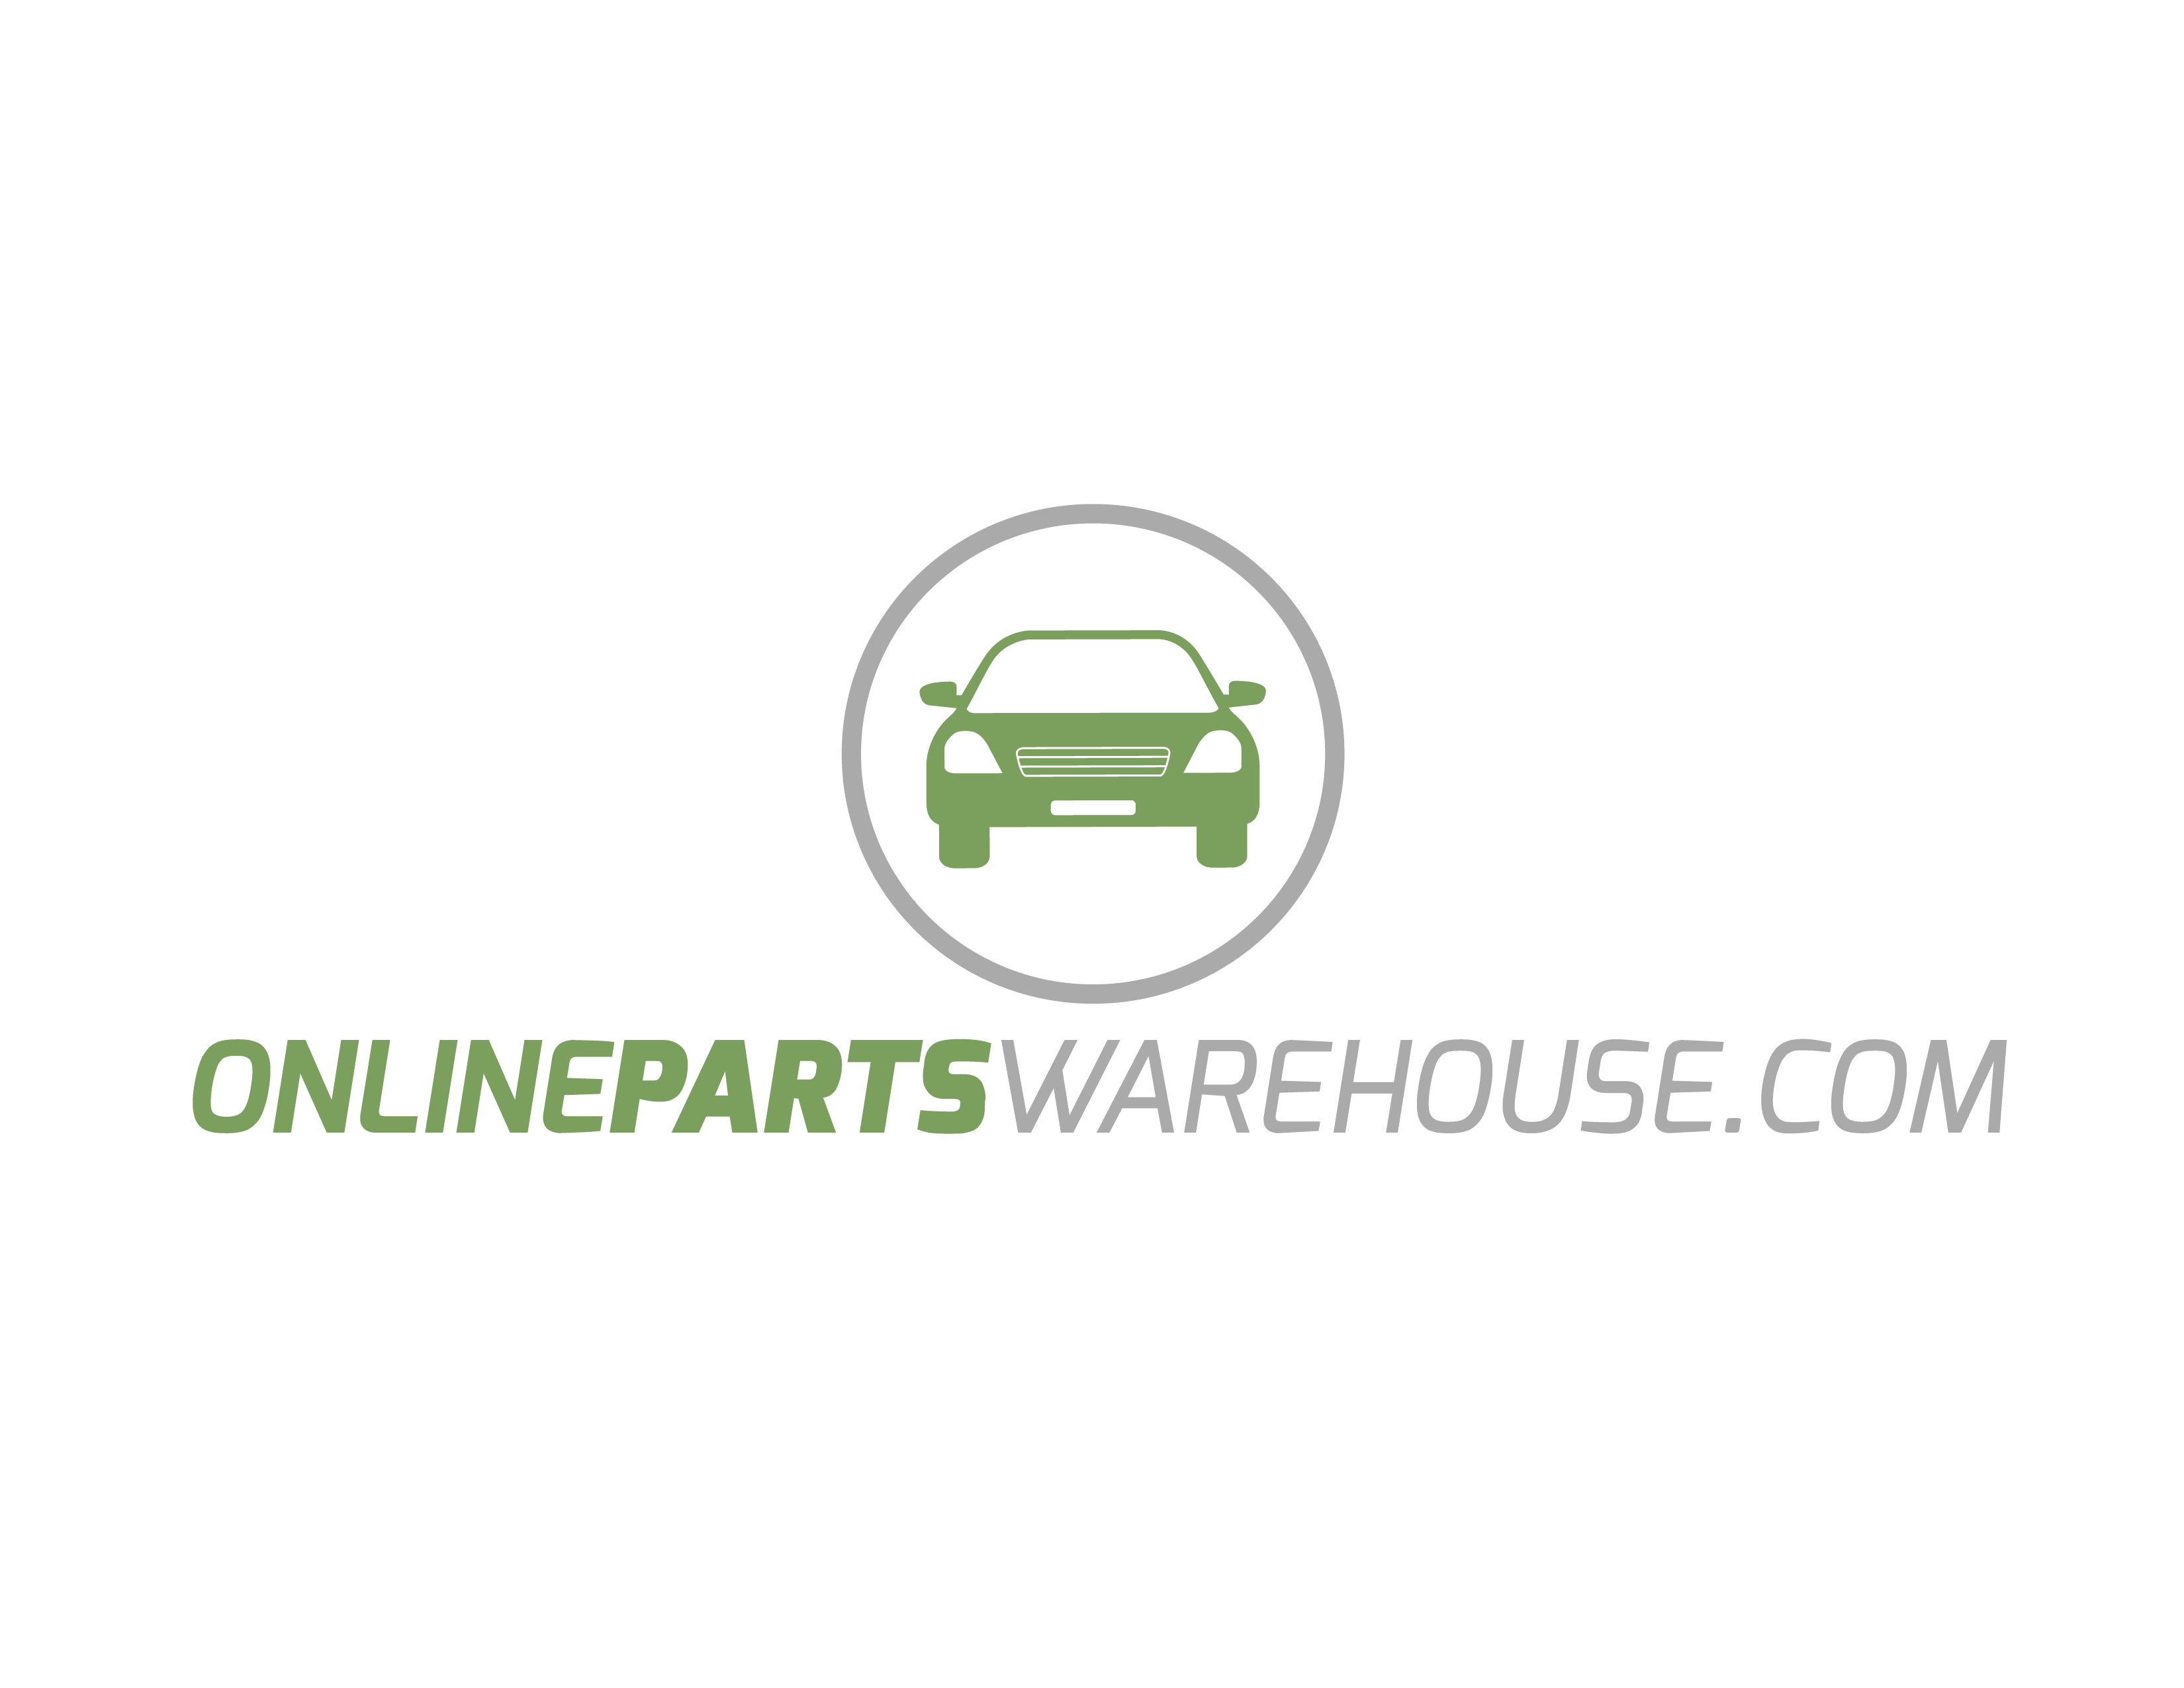  Online Parts Warehouse